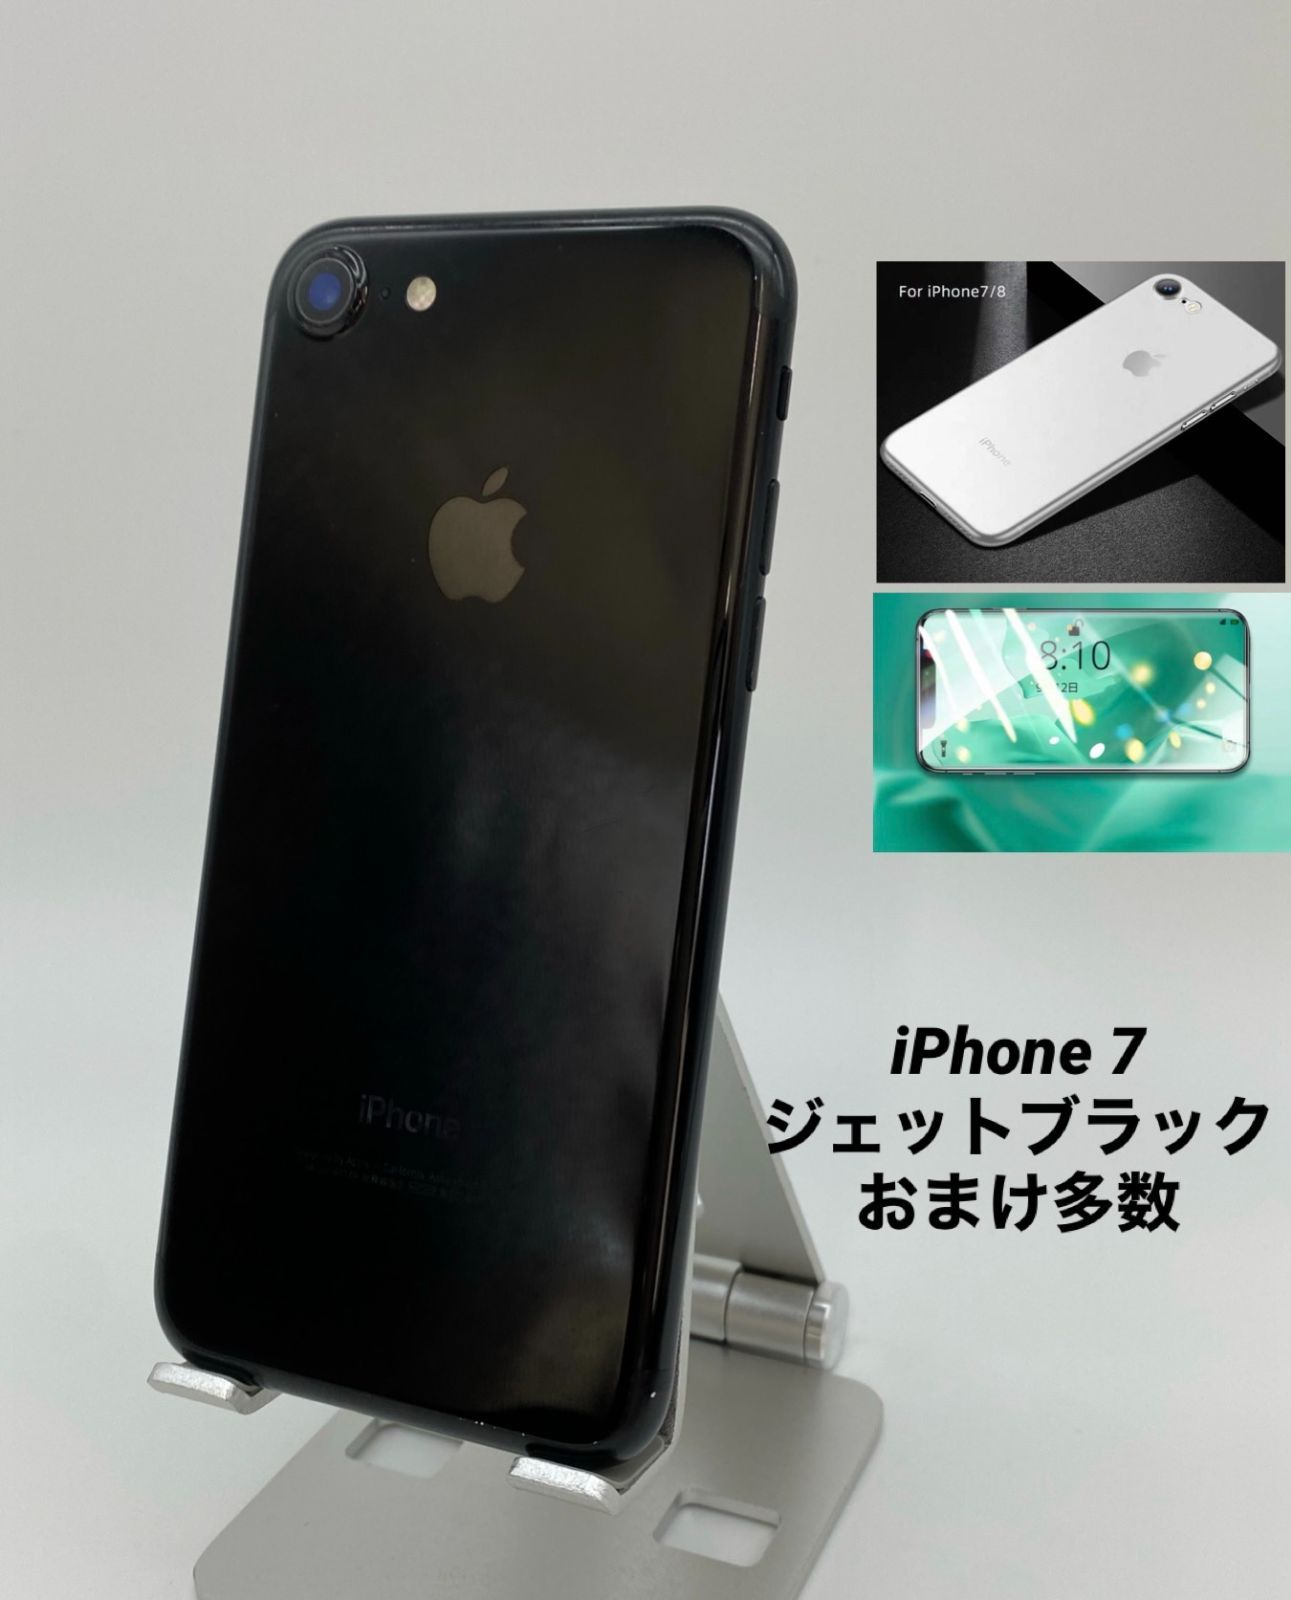 iPhone X Silver 256 GB docomo バッテリー93% - スマートフォン本体